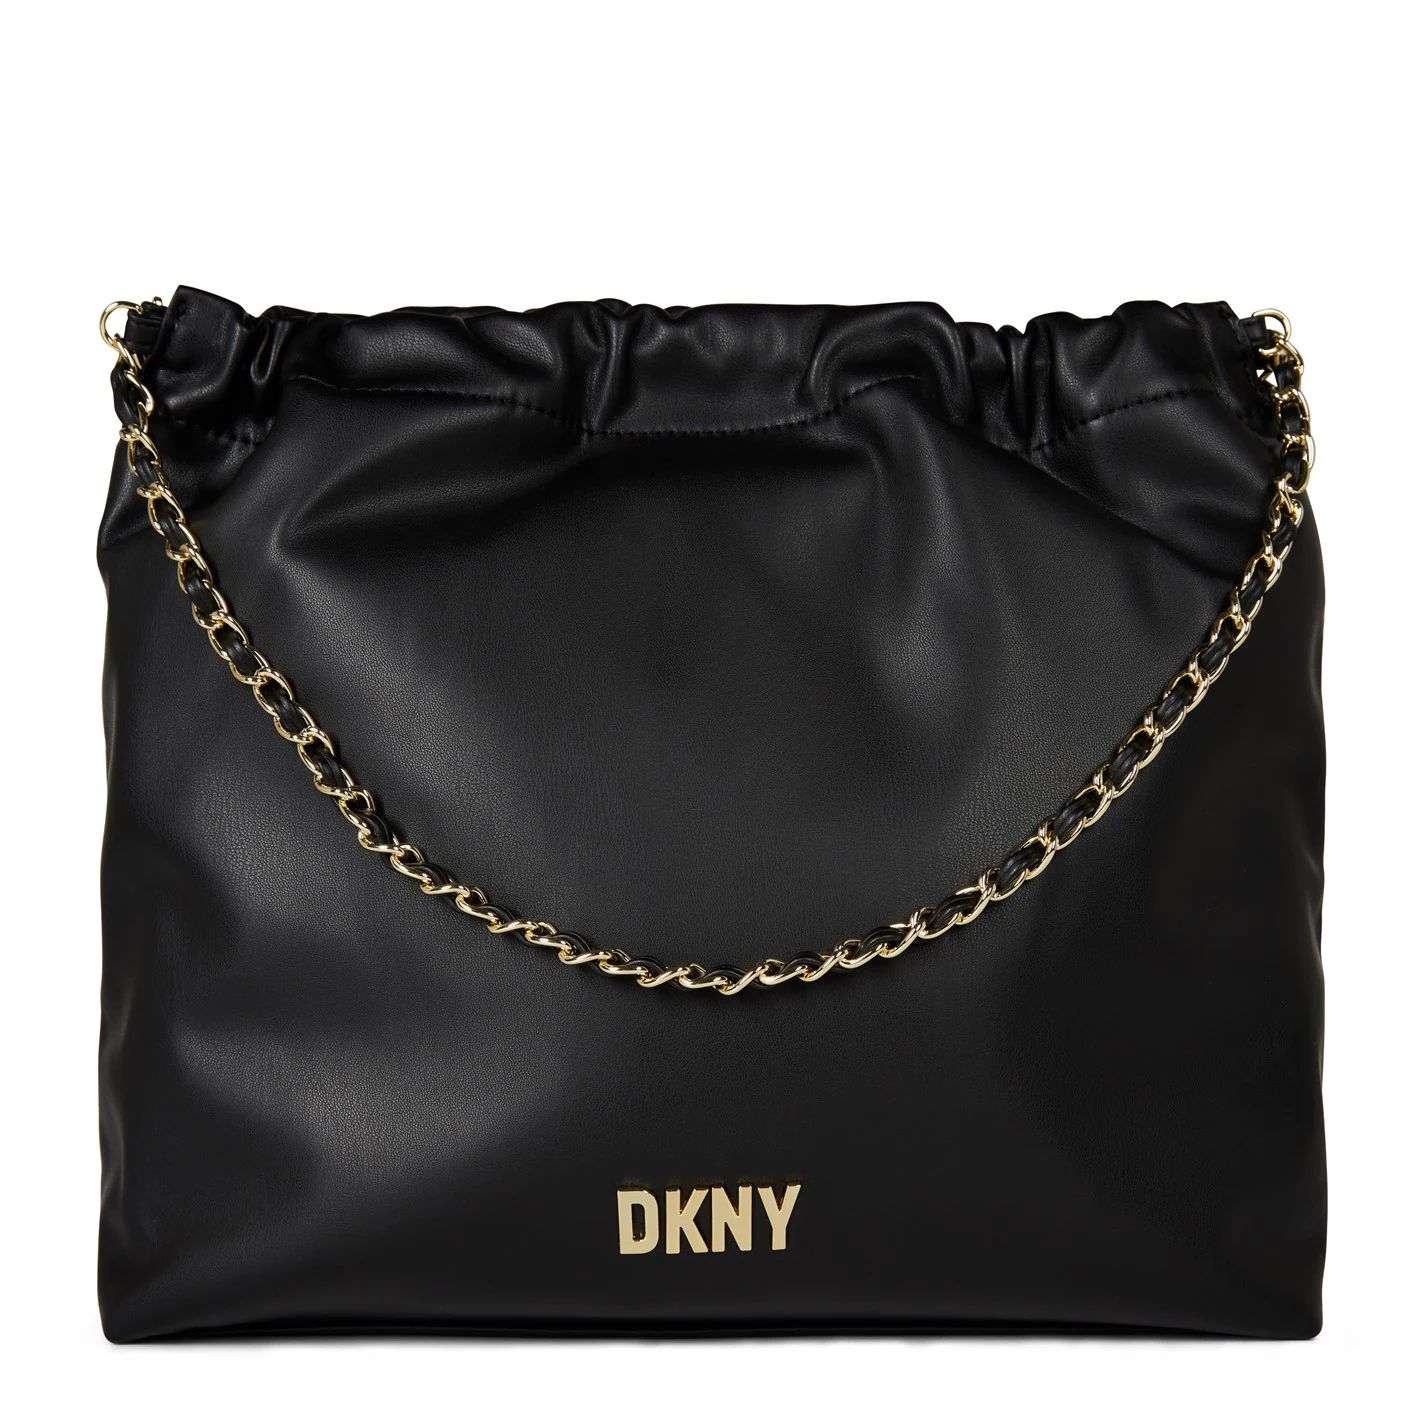 DKNY, DKNY Carol Medium Tote Bag, Black/Gold Bgd